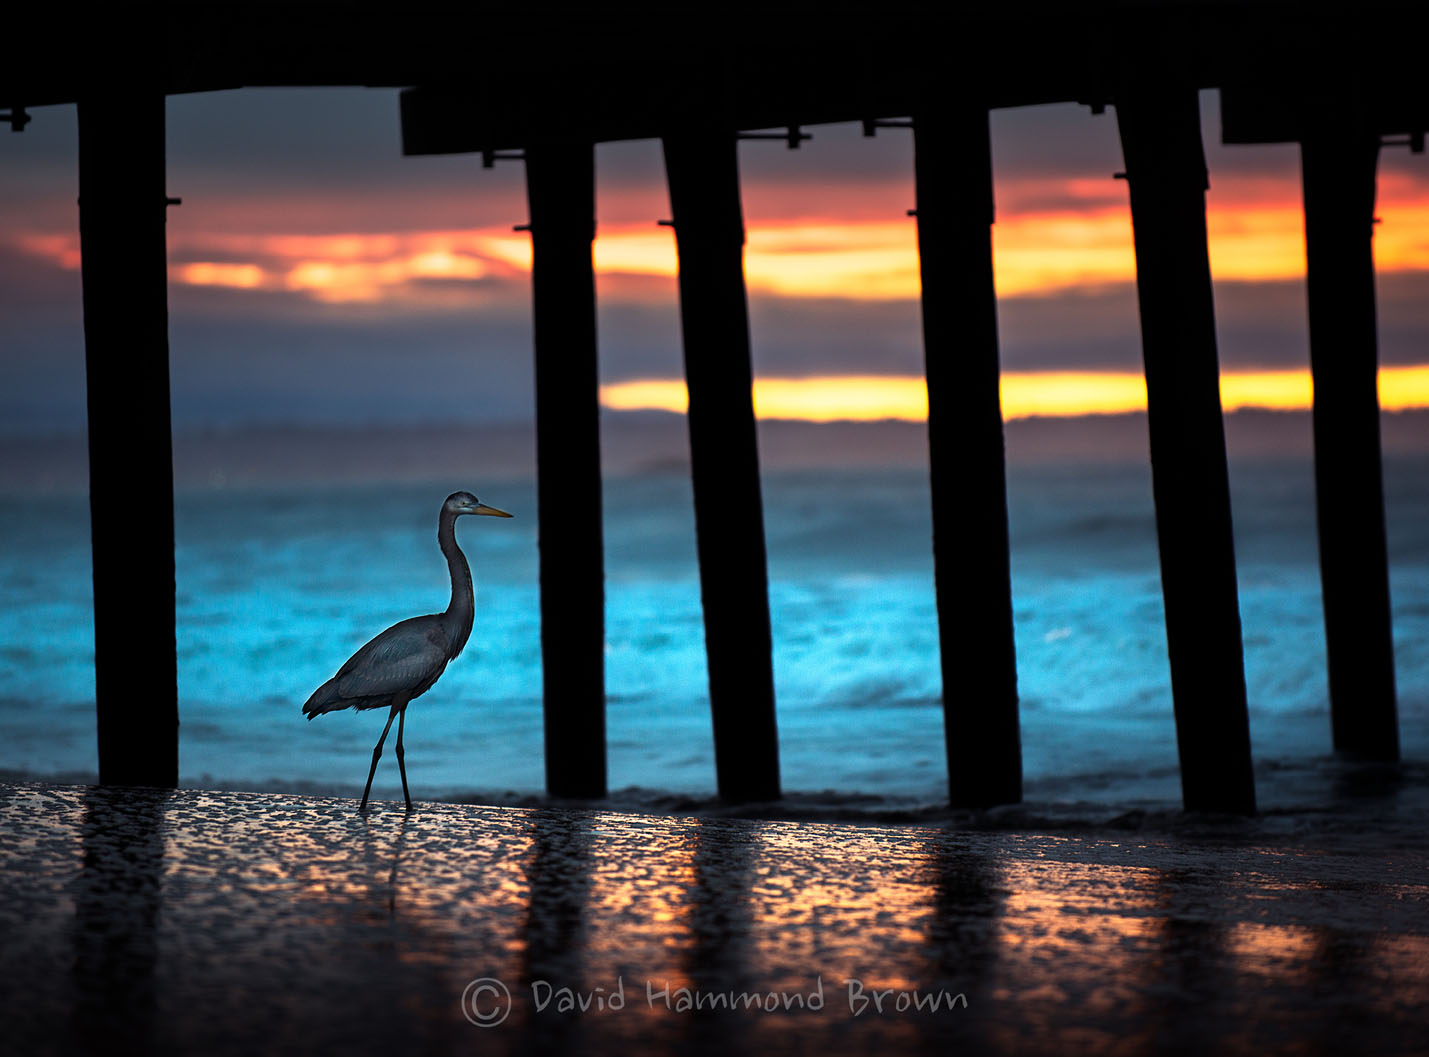 David Hammond Brown Photography - Heron Sunrise